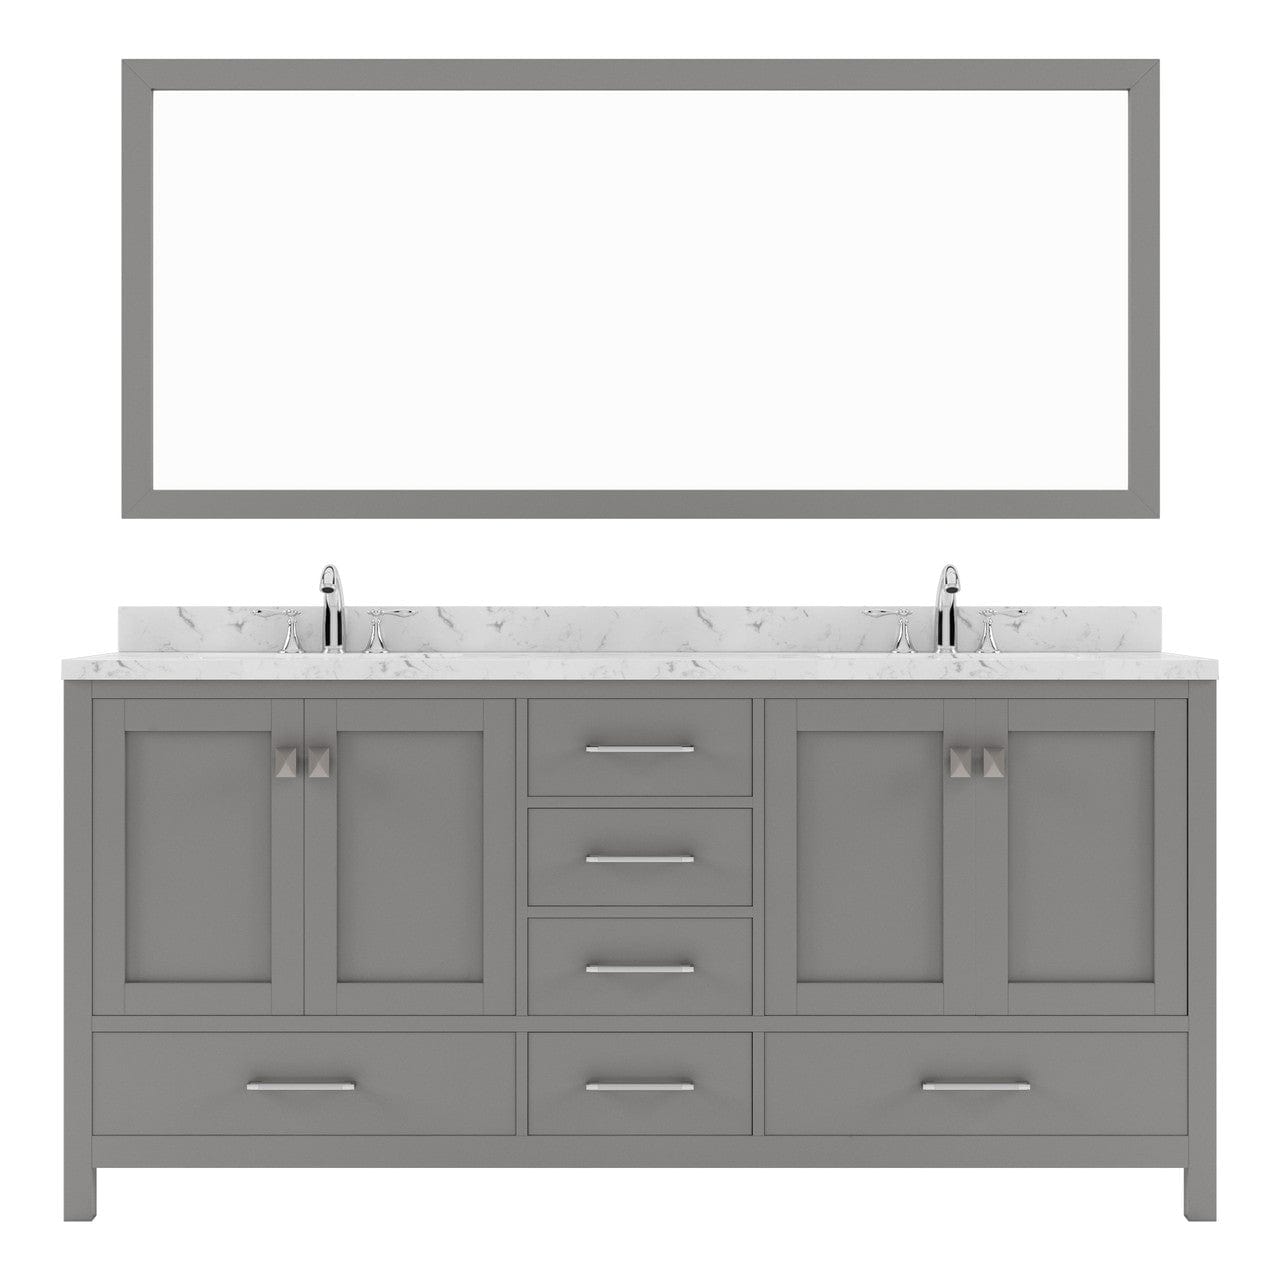 Caroline Avenue 72" Double Bath Vanity in Gray with Quartz Top white background